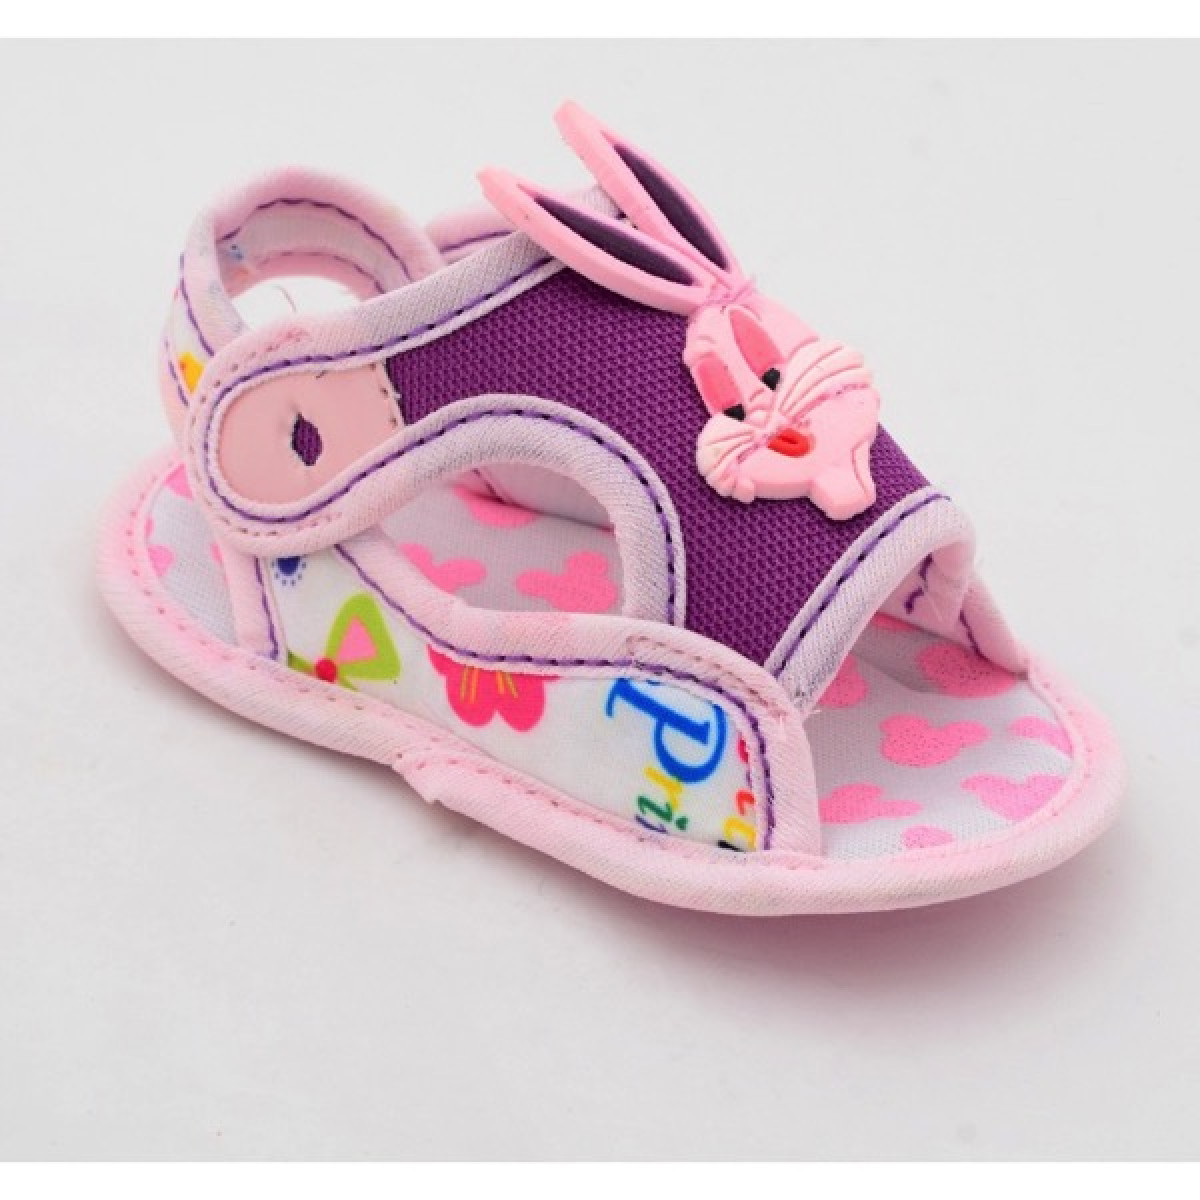 Buy Baby Boy Sandals Online in Pakistan - Kiddyco